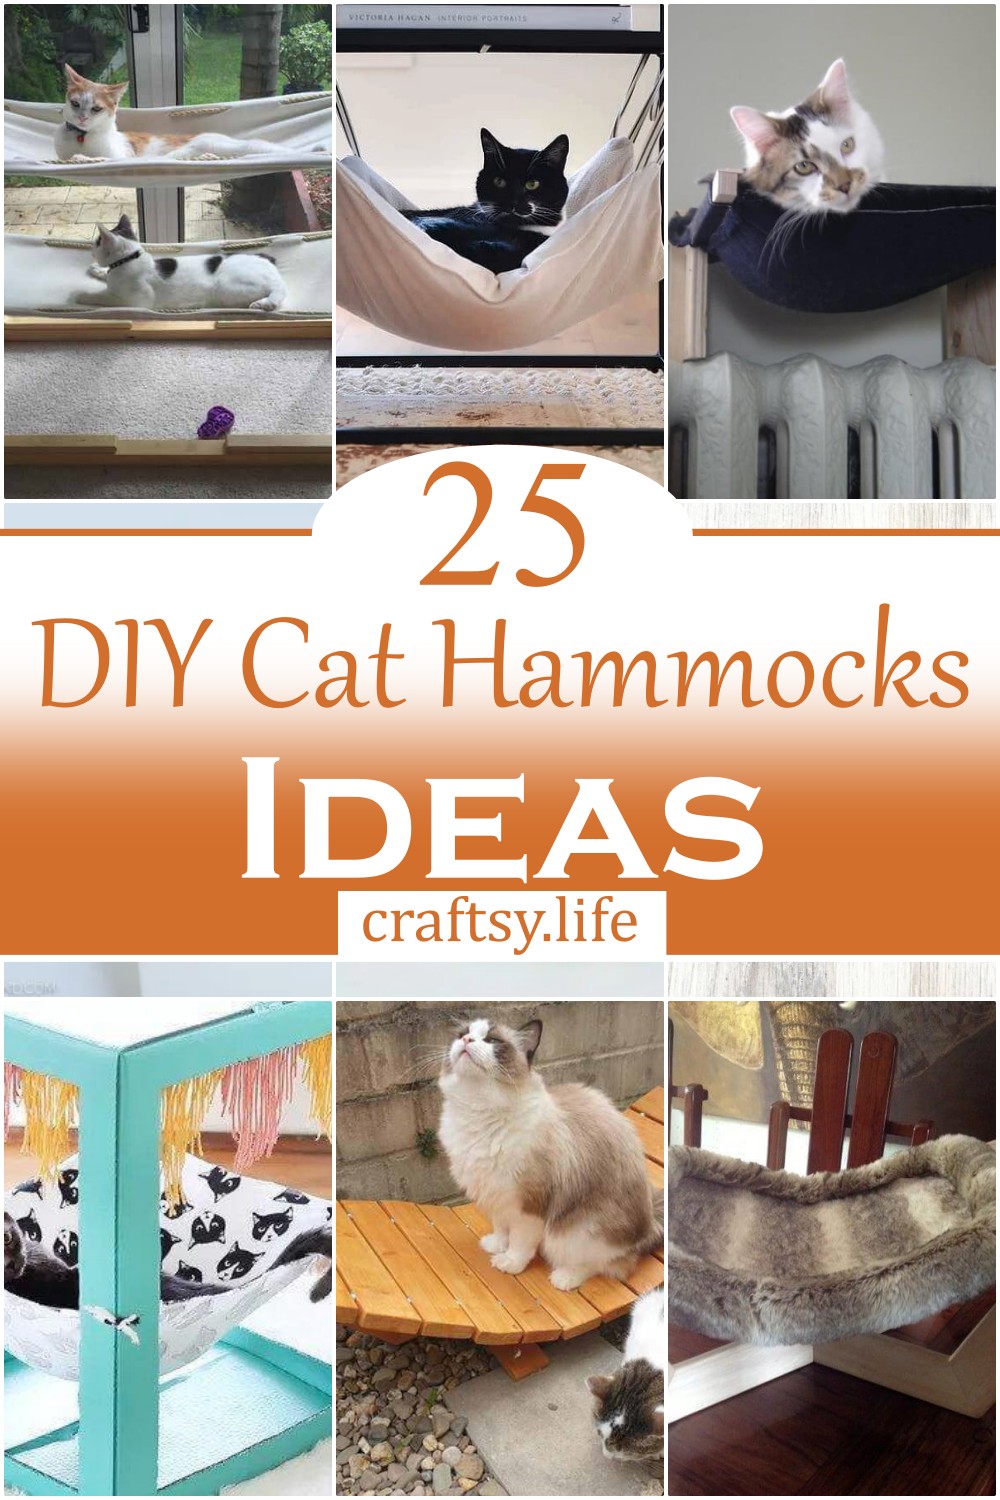 DIY Cat Hammocks